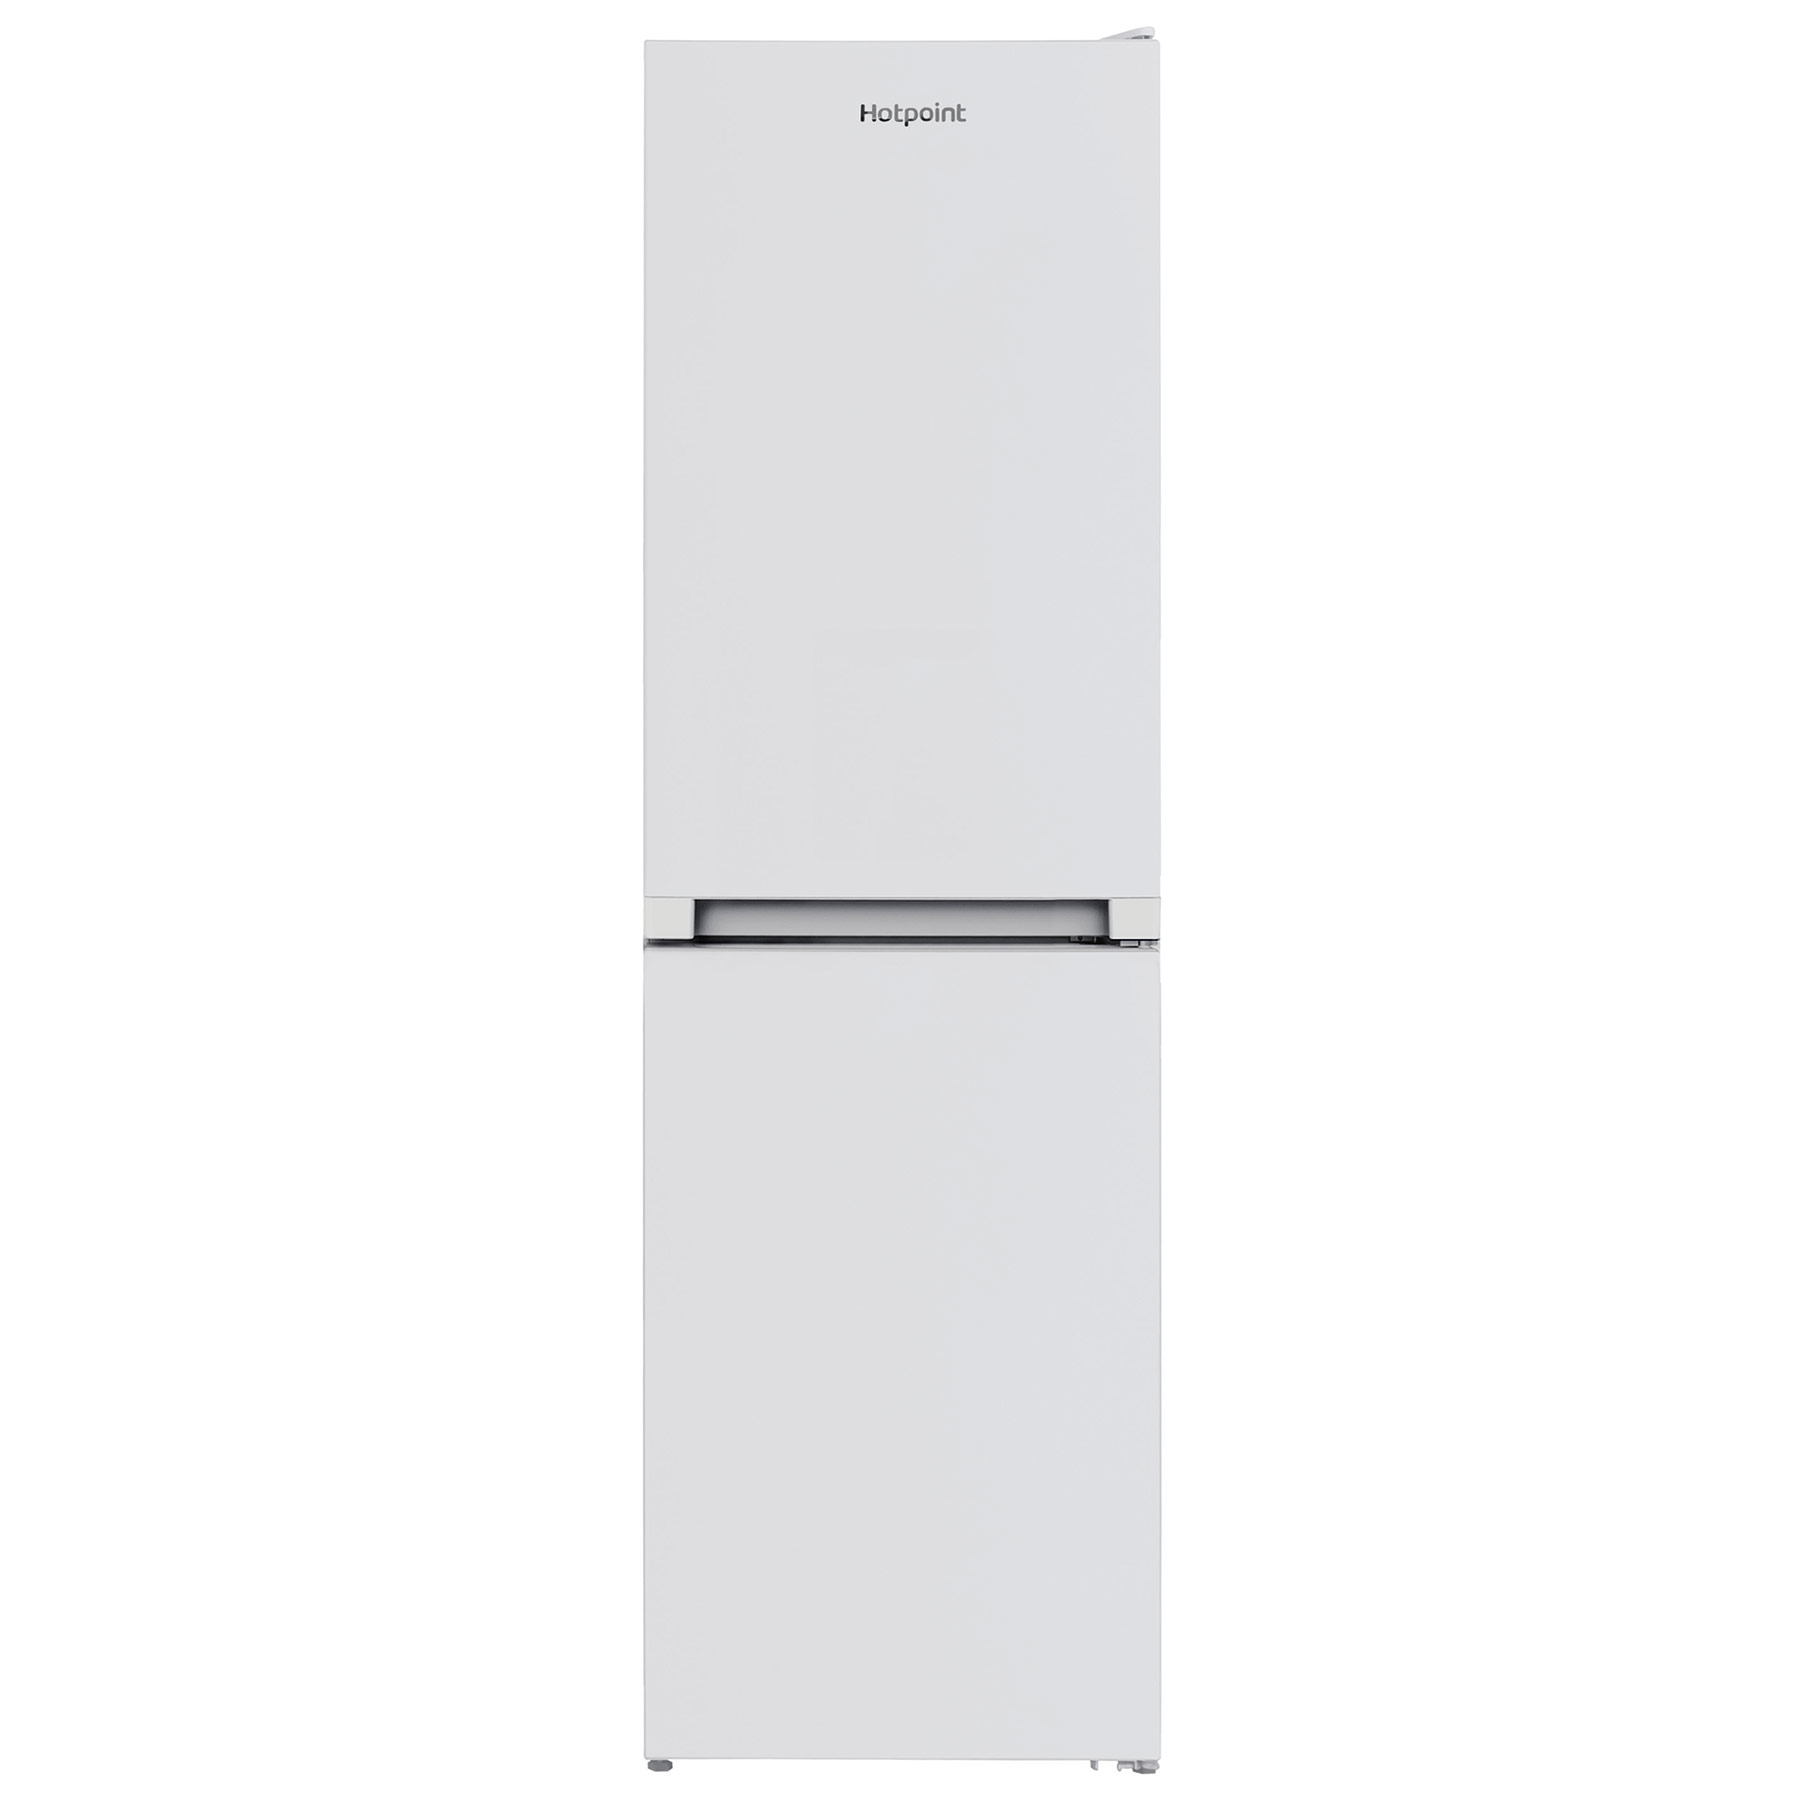 Hotpoint HBNF55182WUK 54cm Frost Free Fridge Freezer in White 1 83m E